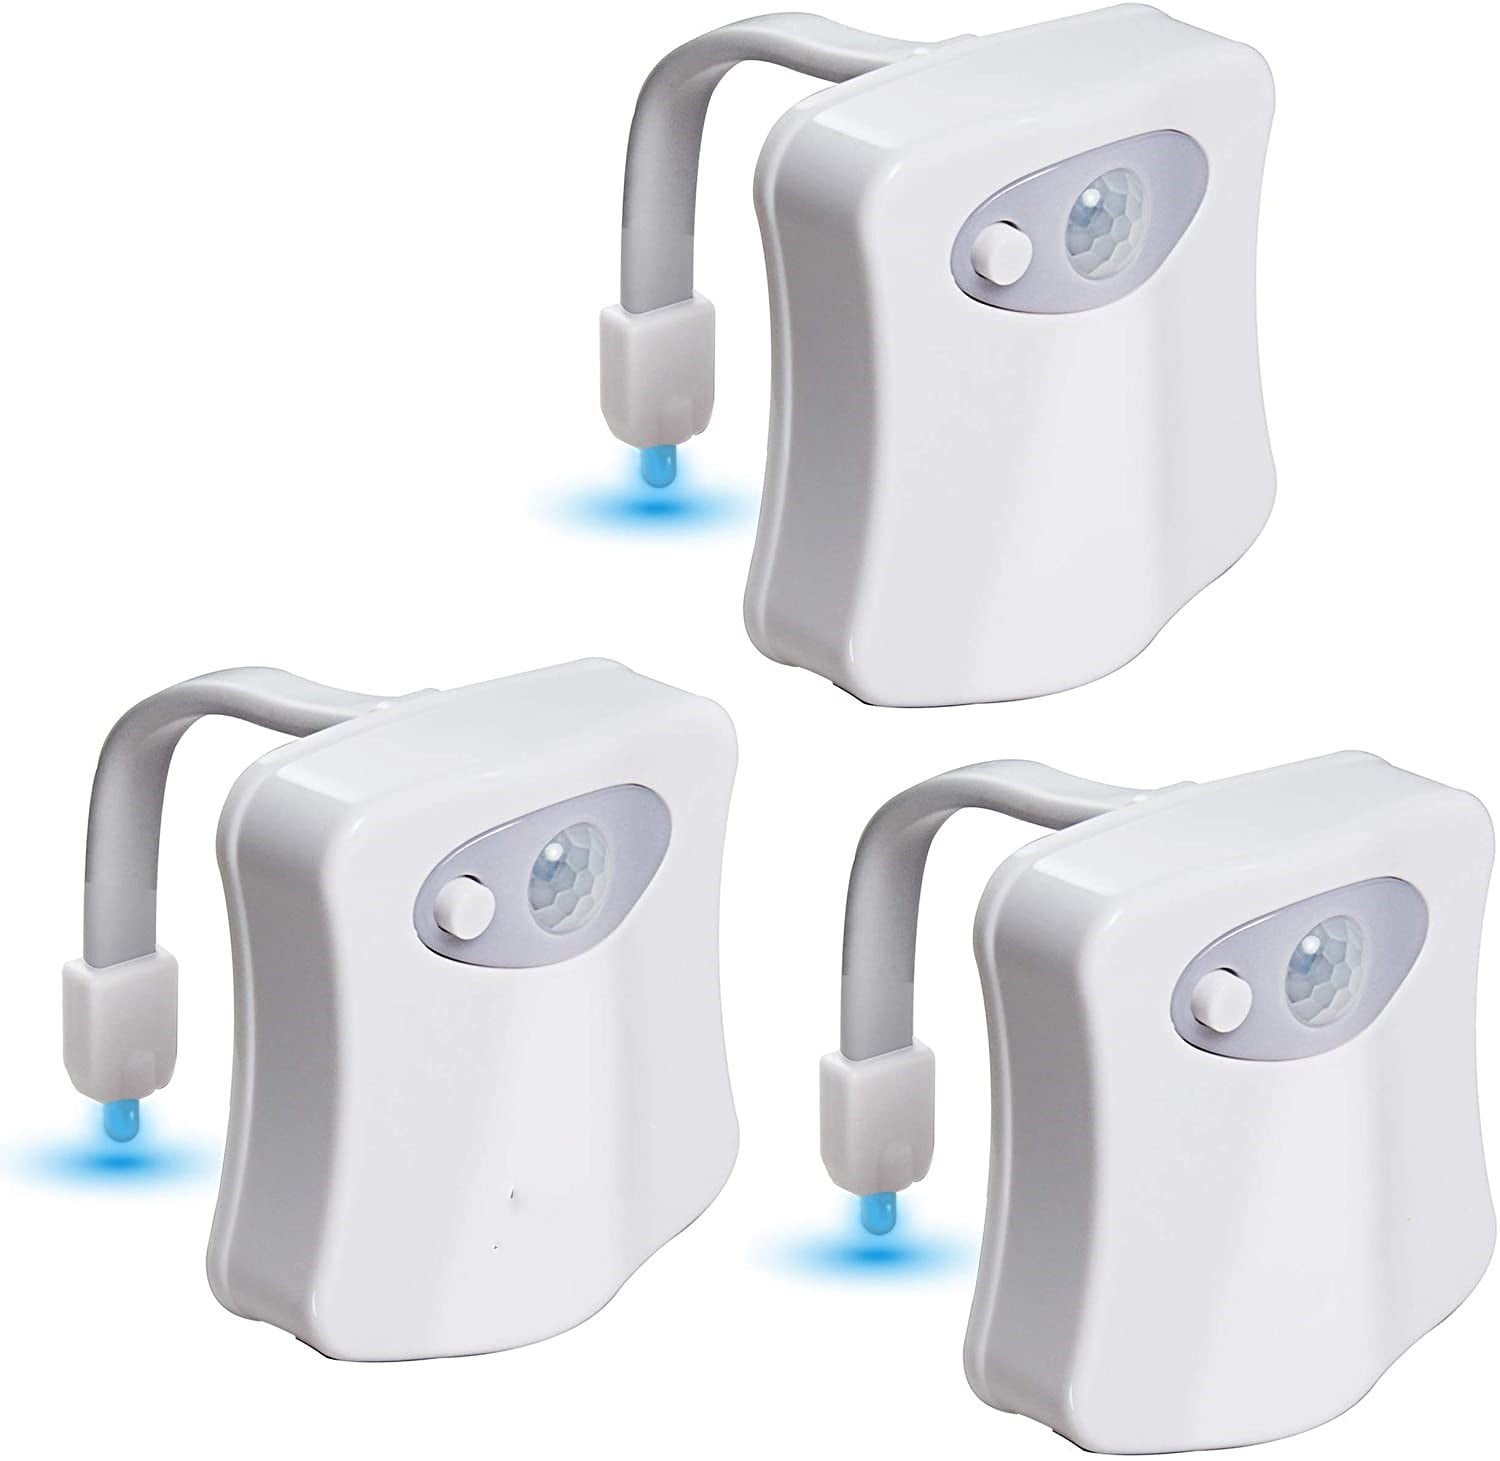 Details about   3 x Toilet Bathroom Night Light PIR Motion Activated Seat Sensor 8Color led 